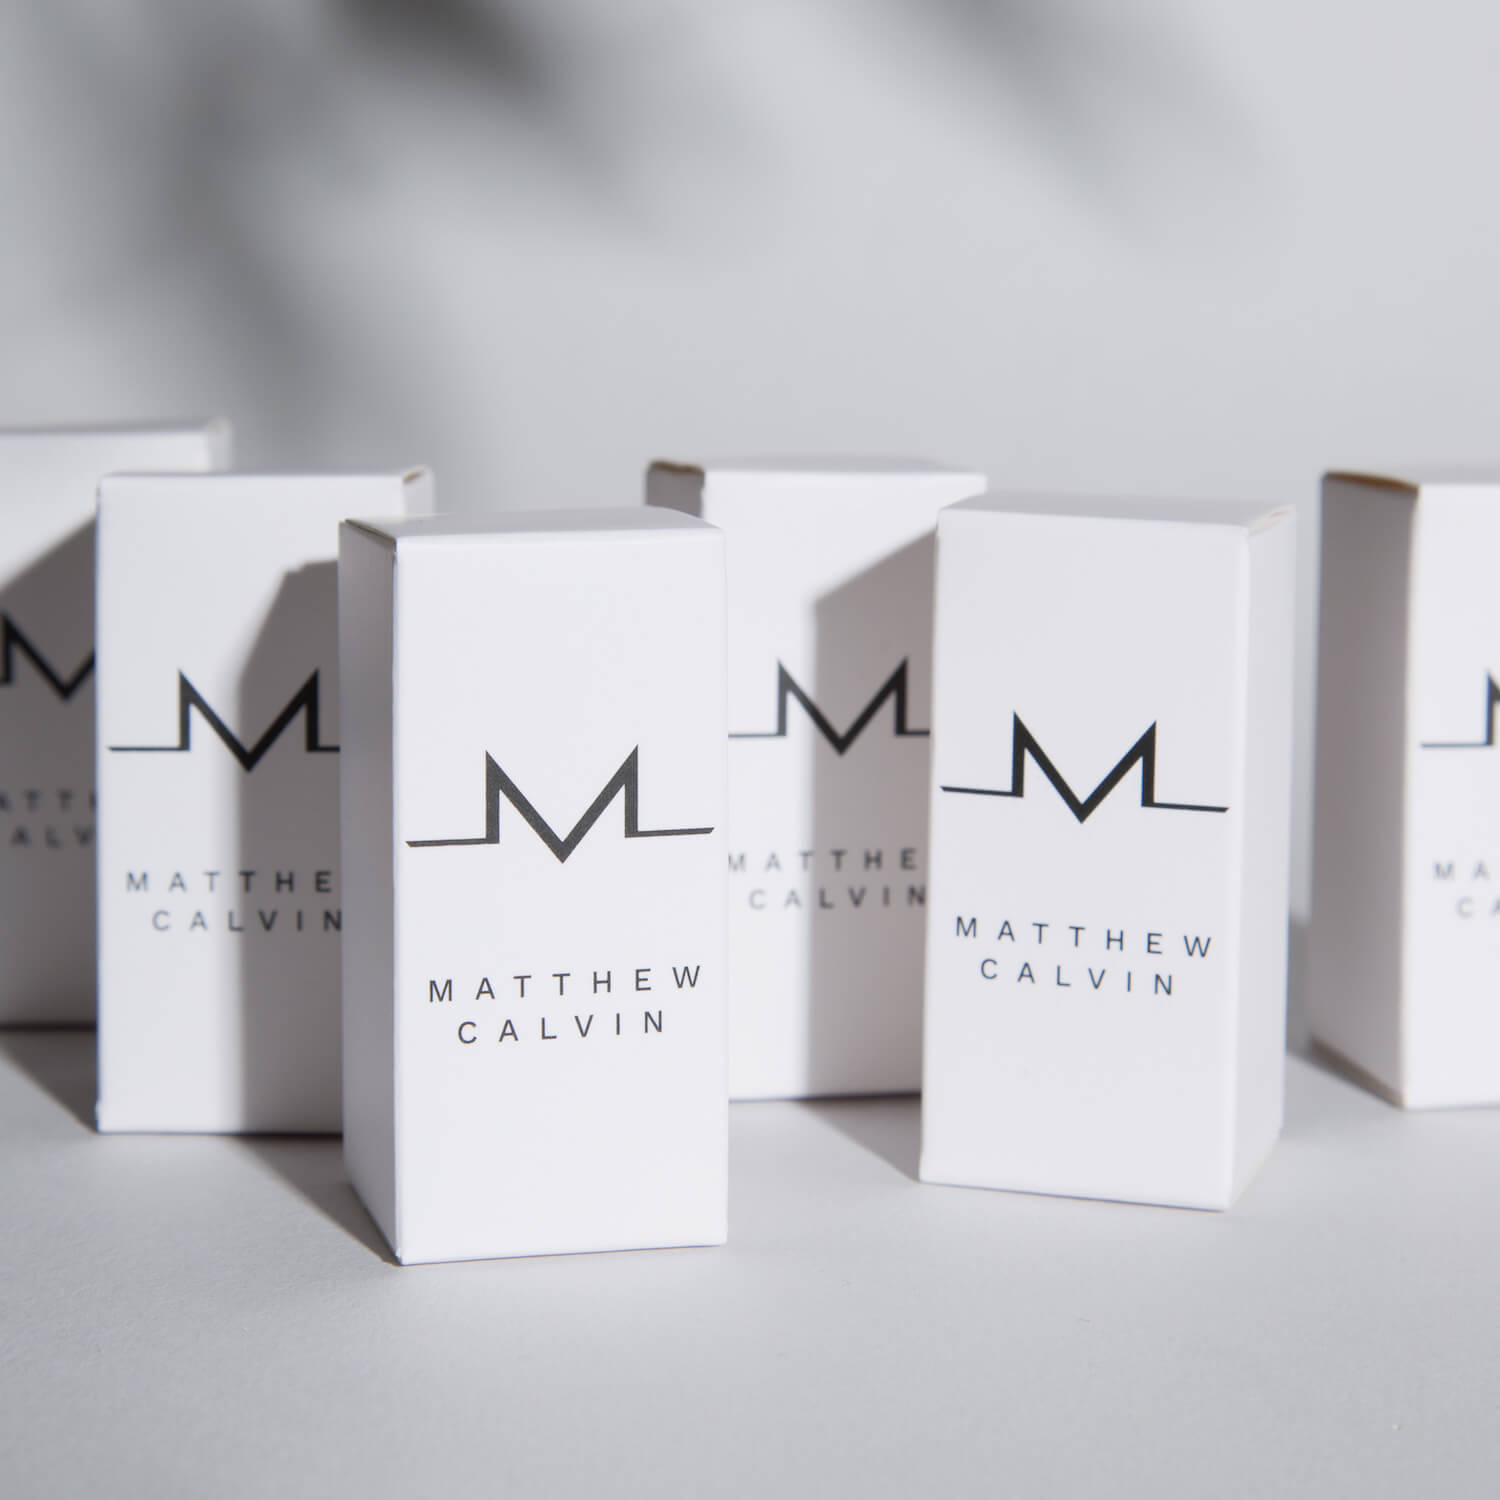 White jewellery boxes for Matthew Calvin earrings